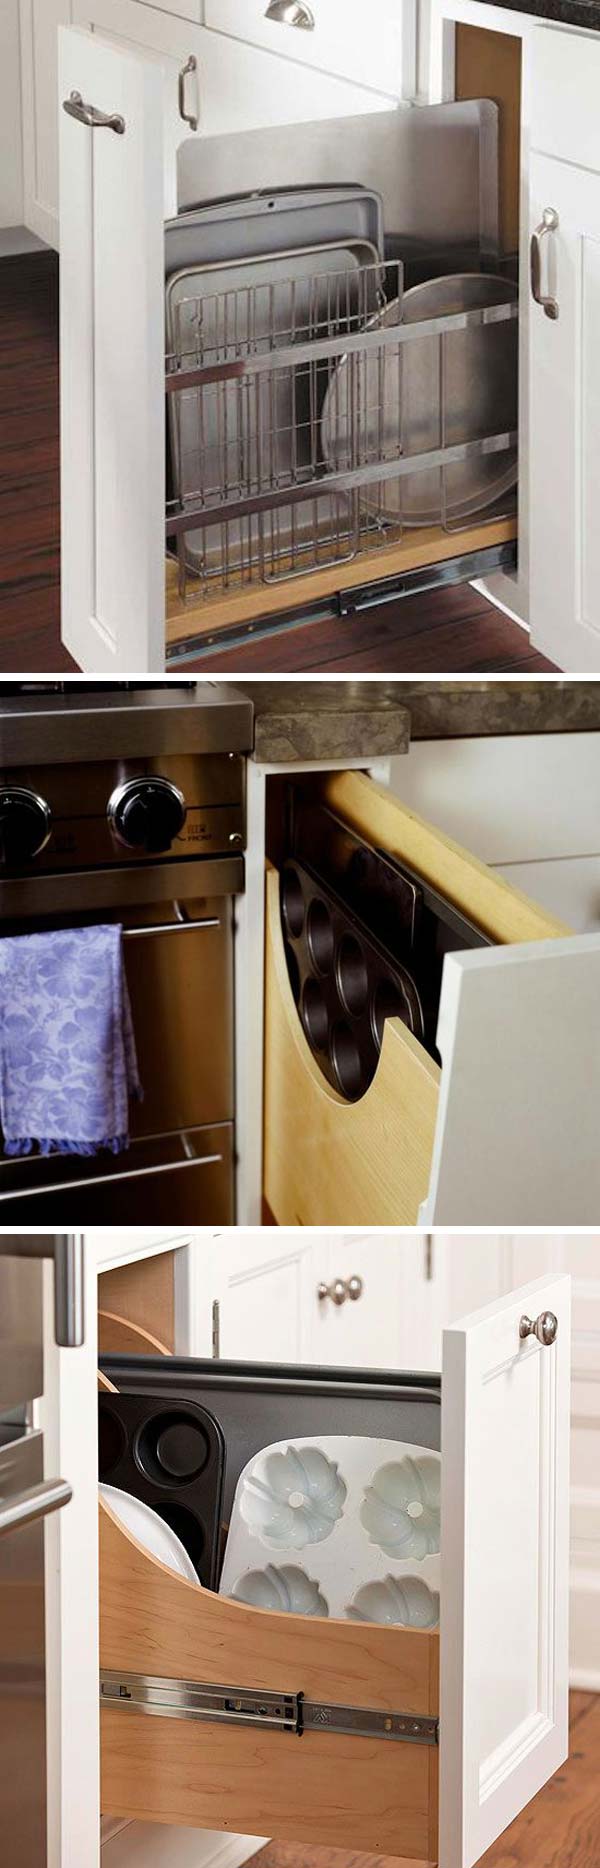 Kitchen cabinets and drawers organization hacks 2.jpg